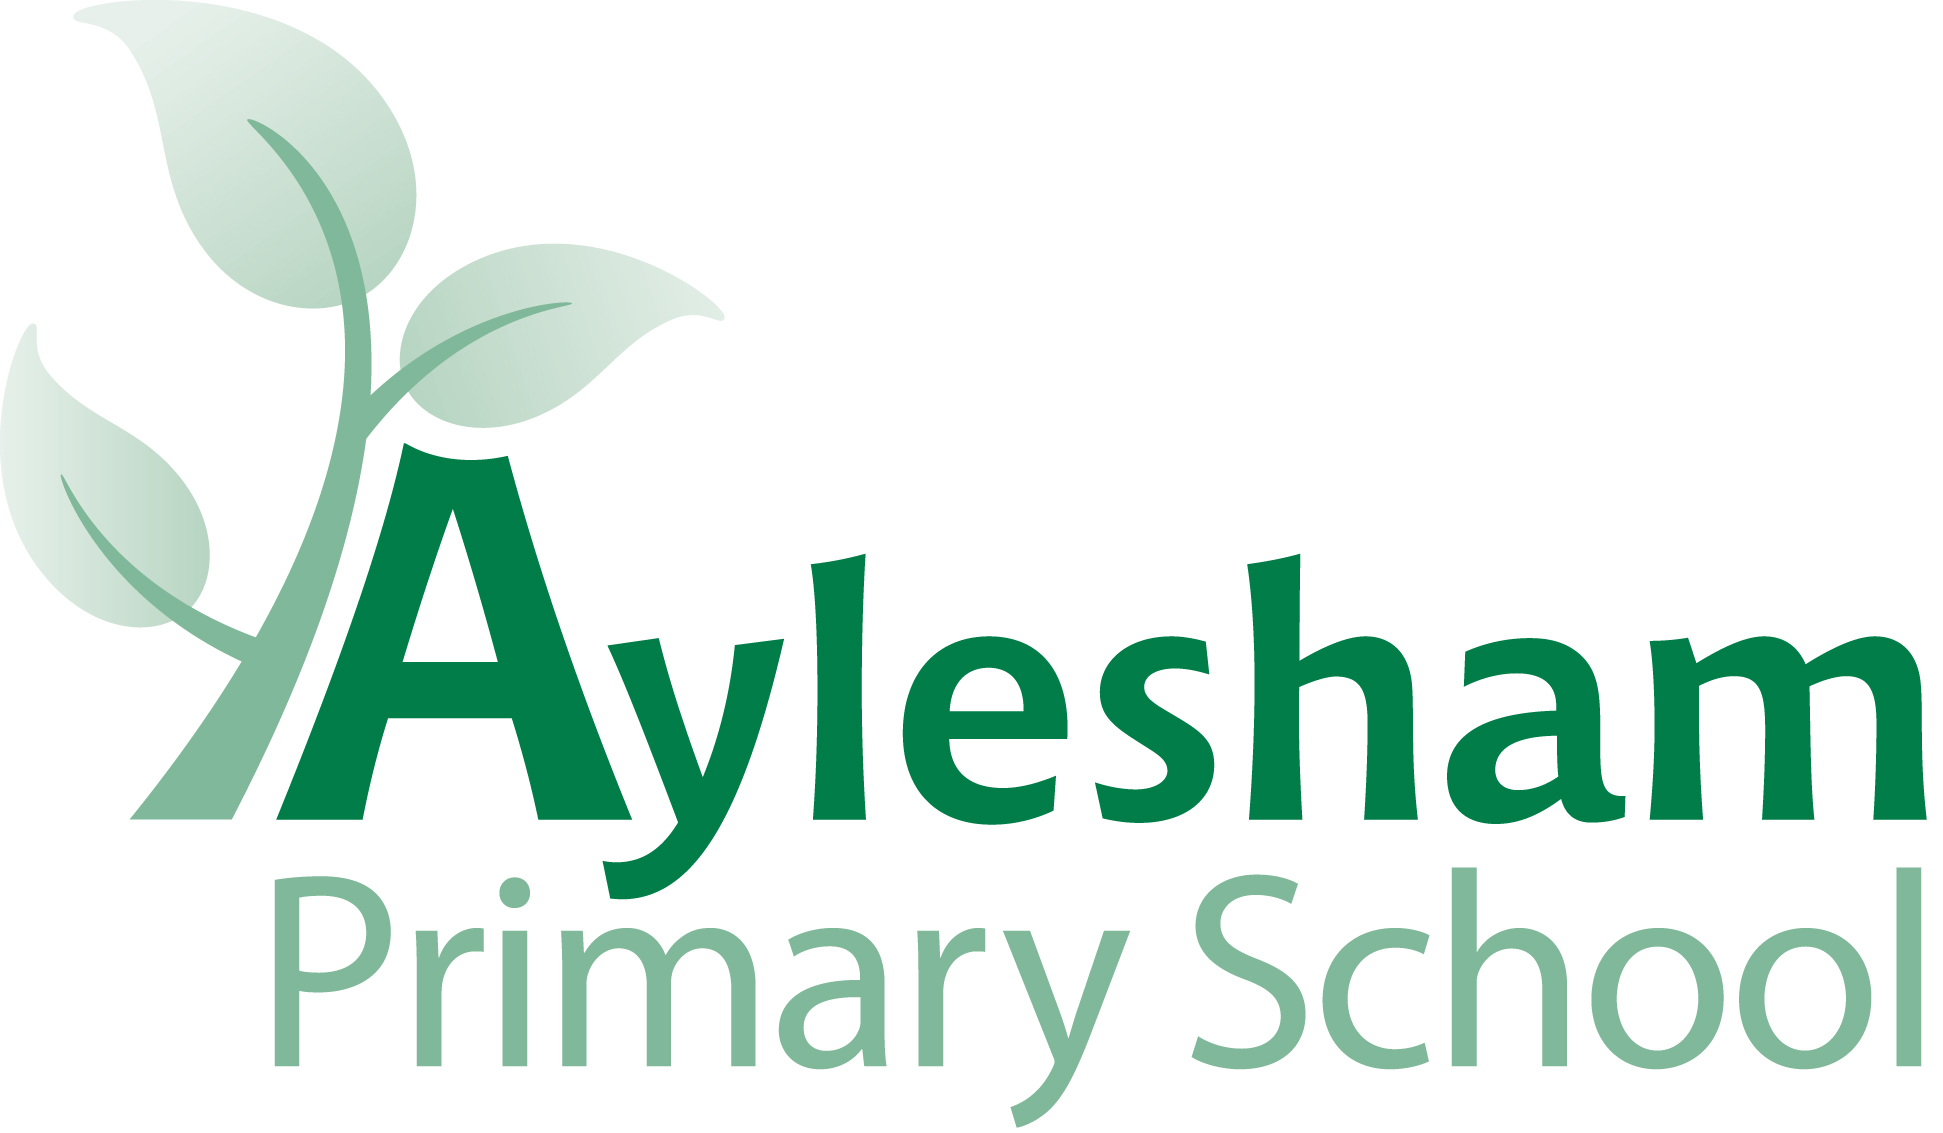 Aylesham Primary School